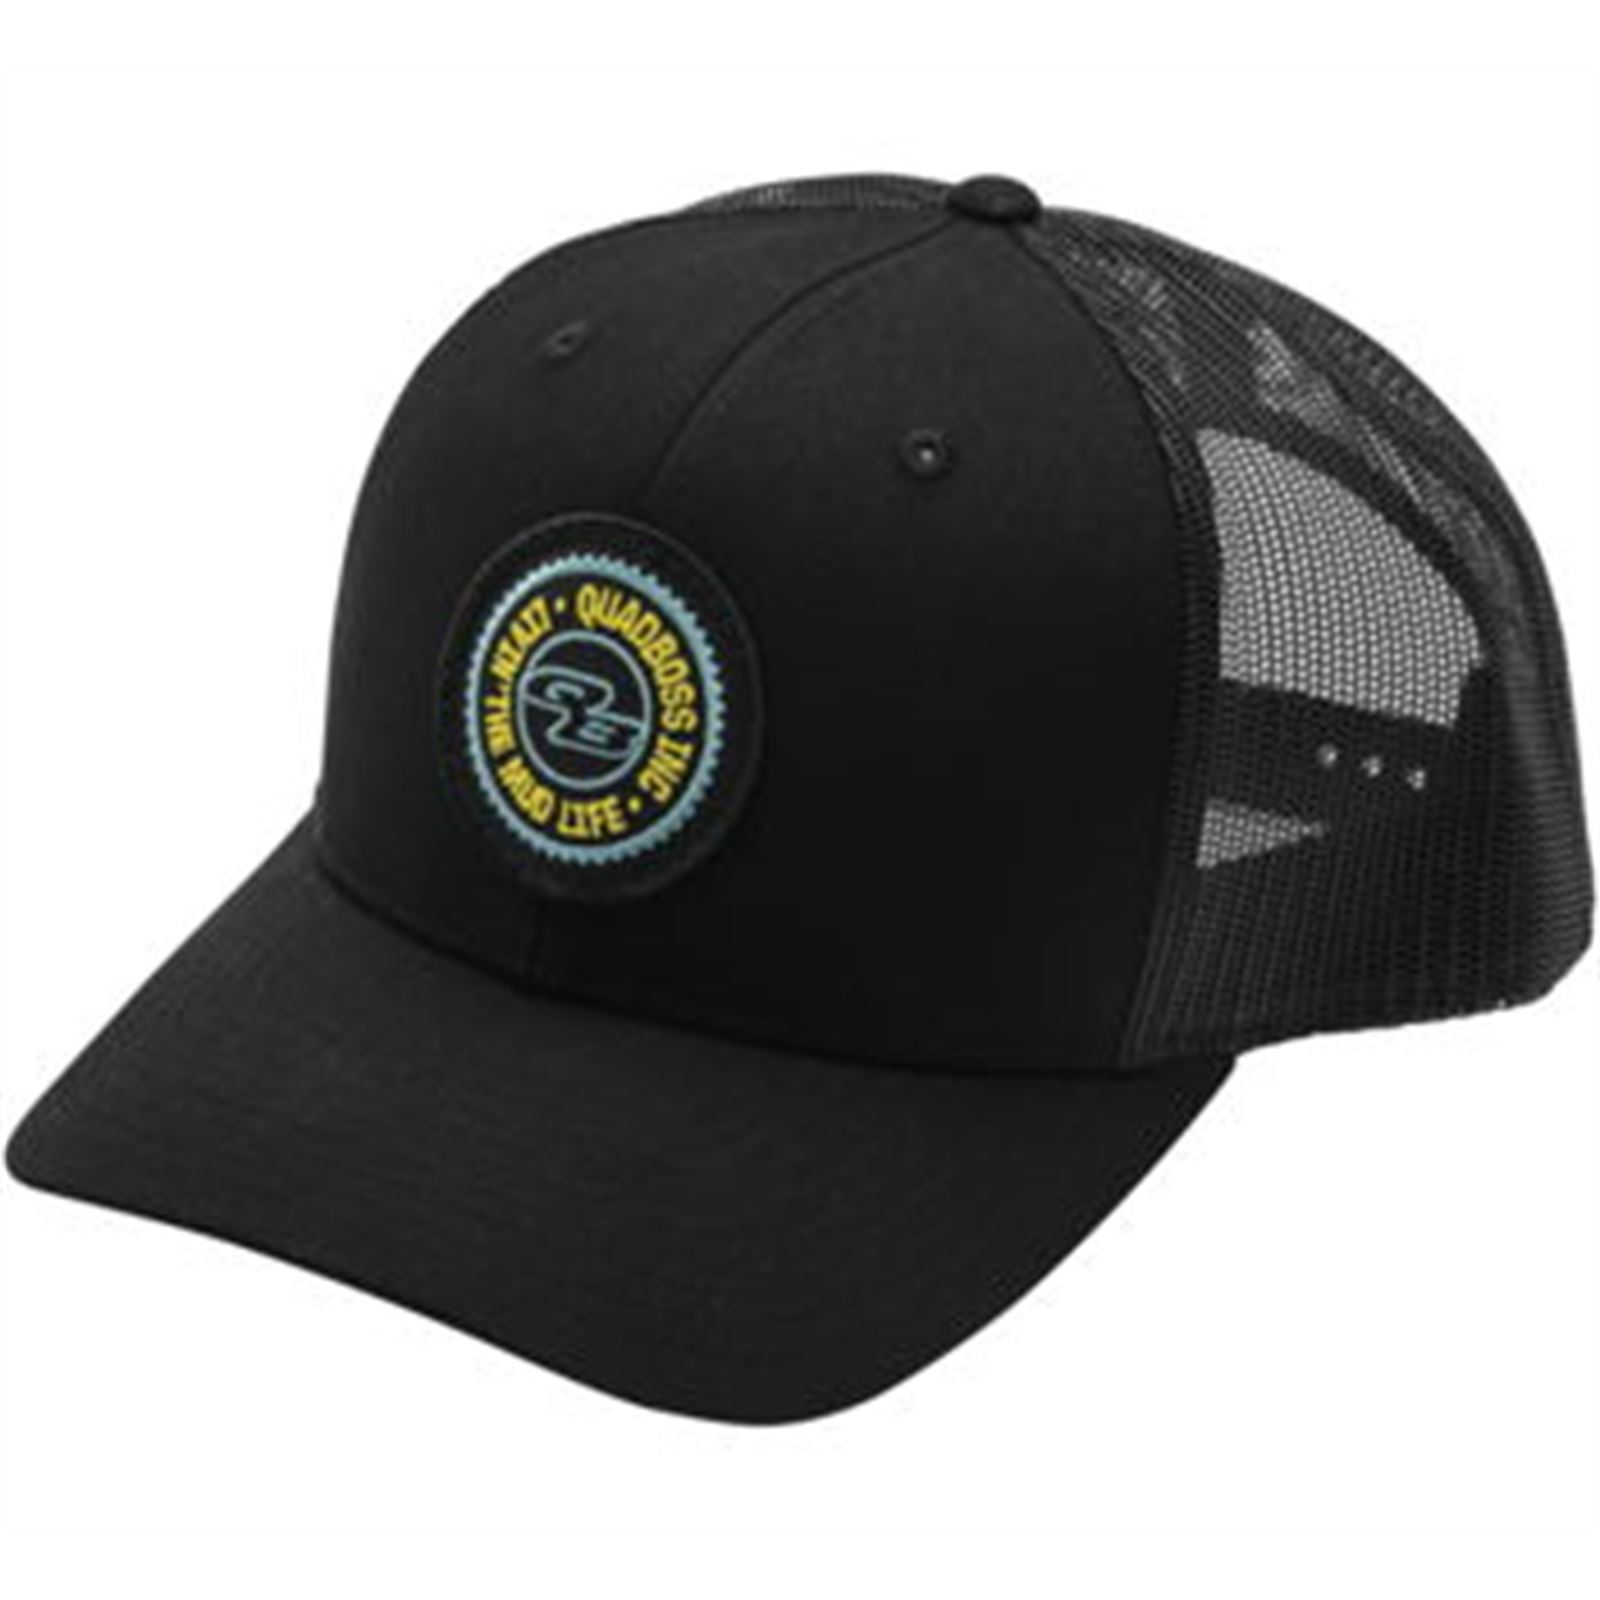 Quadboss Sprocket Snap Hat - Black - One Size